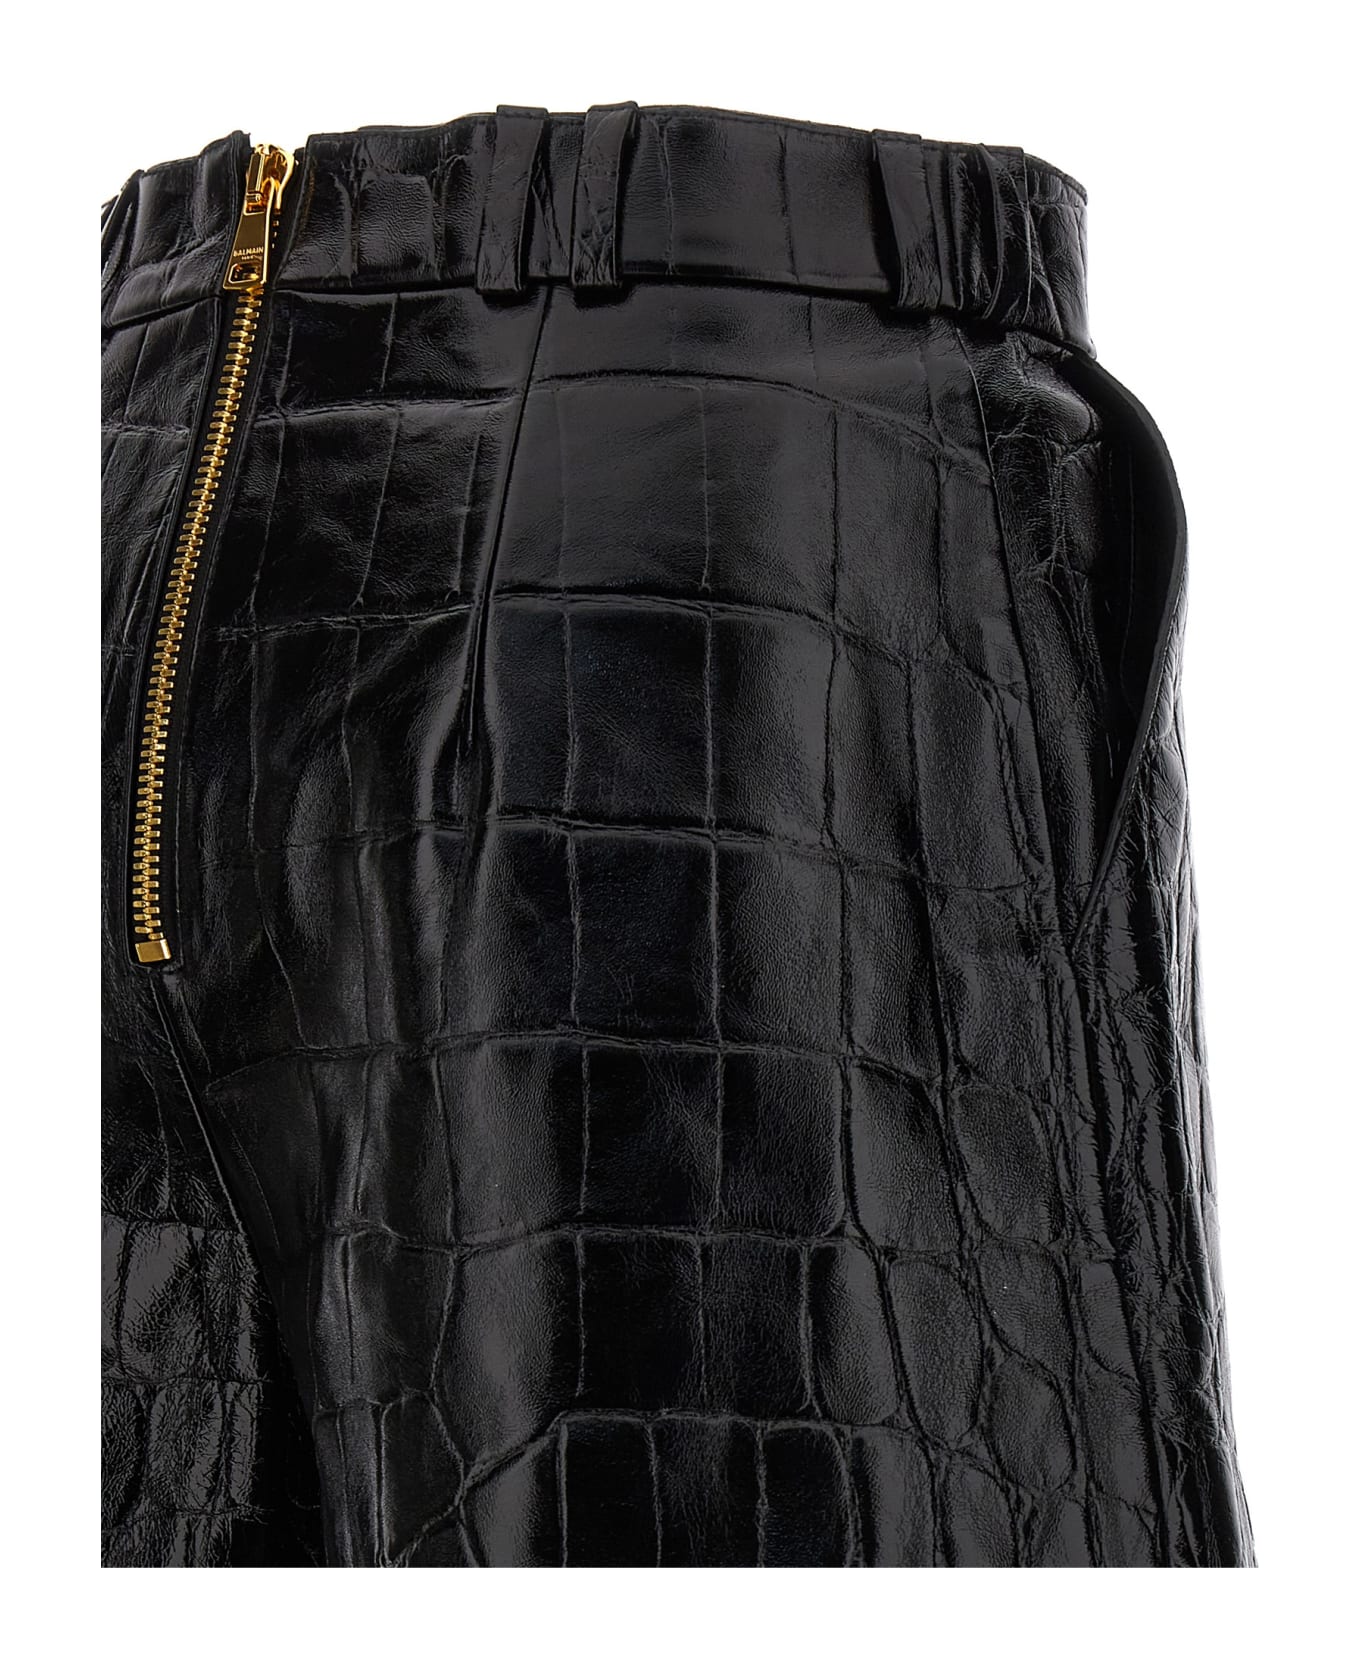 Balmain Leather Shorts - Black ショートパンツ